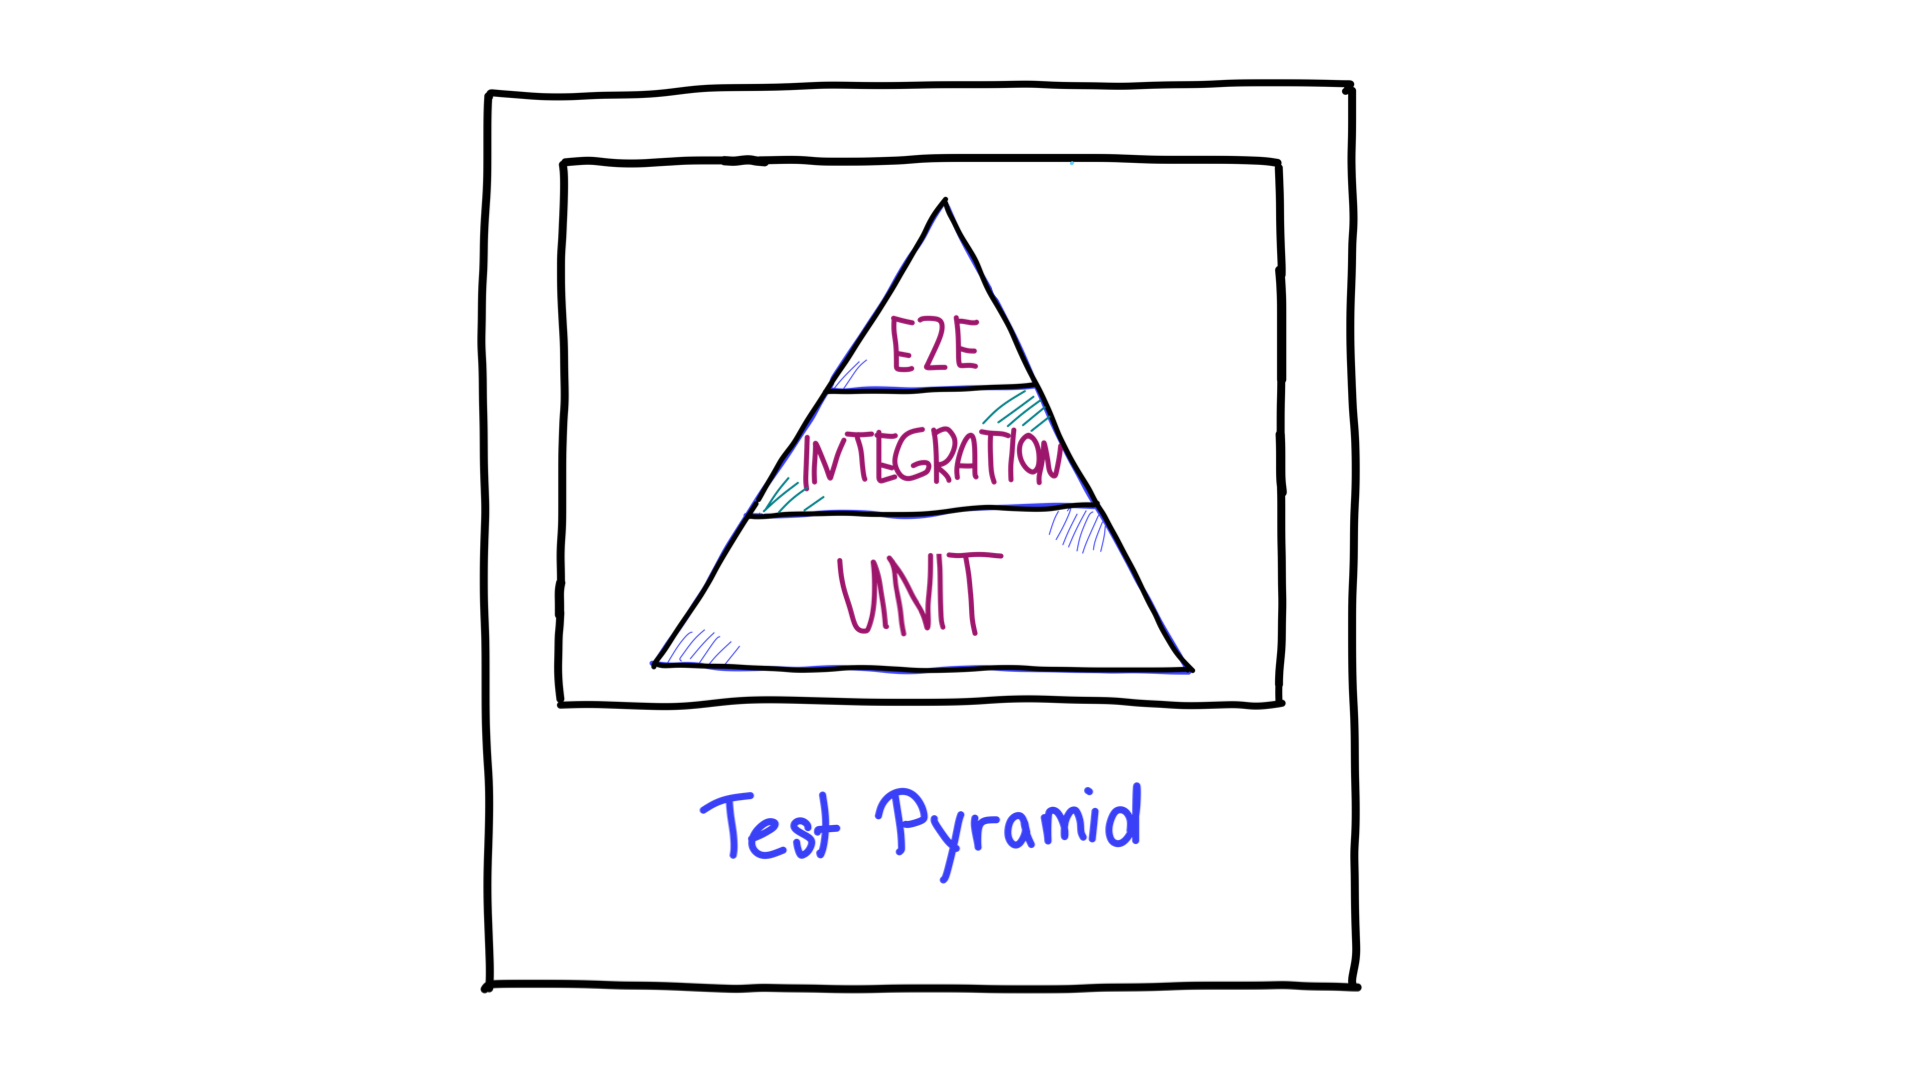 Pirámide de prueba.